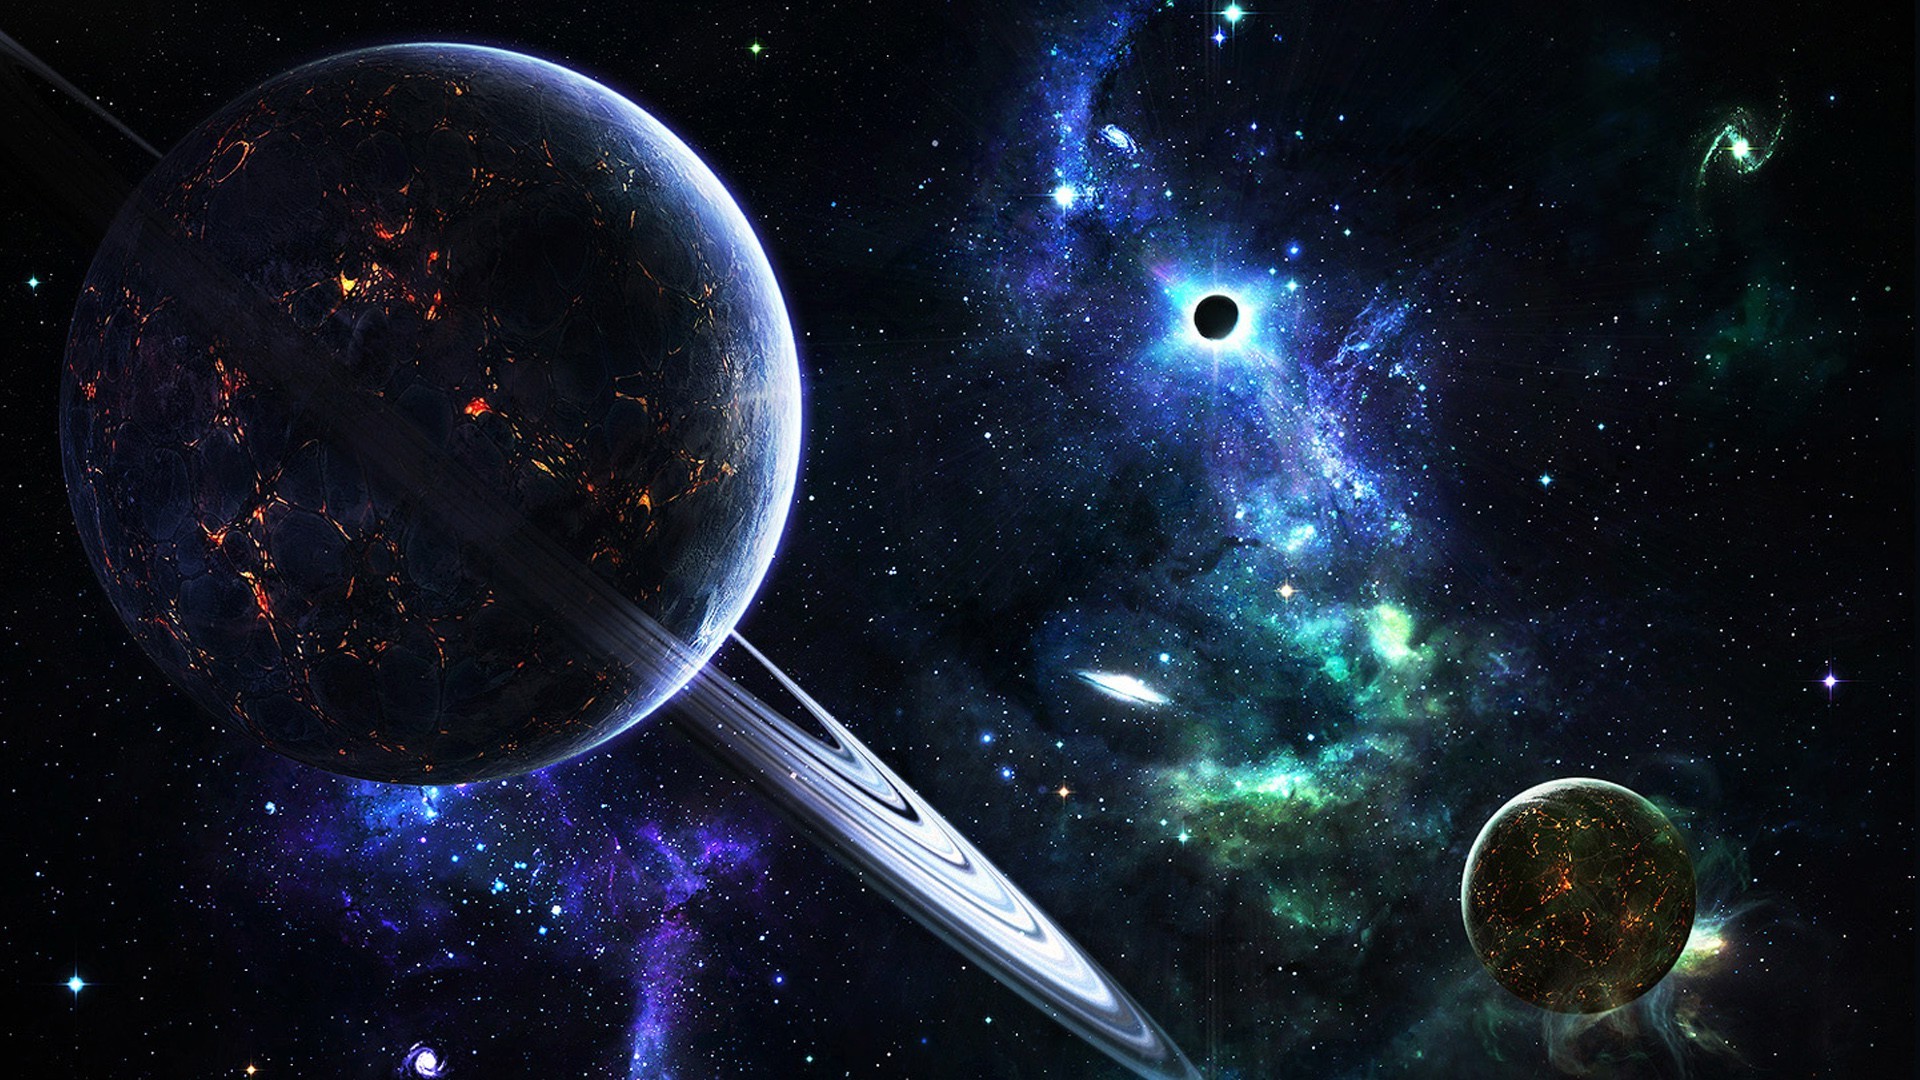 espacio fondo de pantalla hd,espacio exterior,objeto astronómico,universo,espacio,planeta